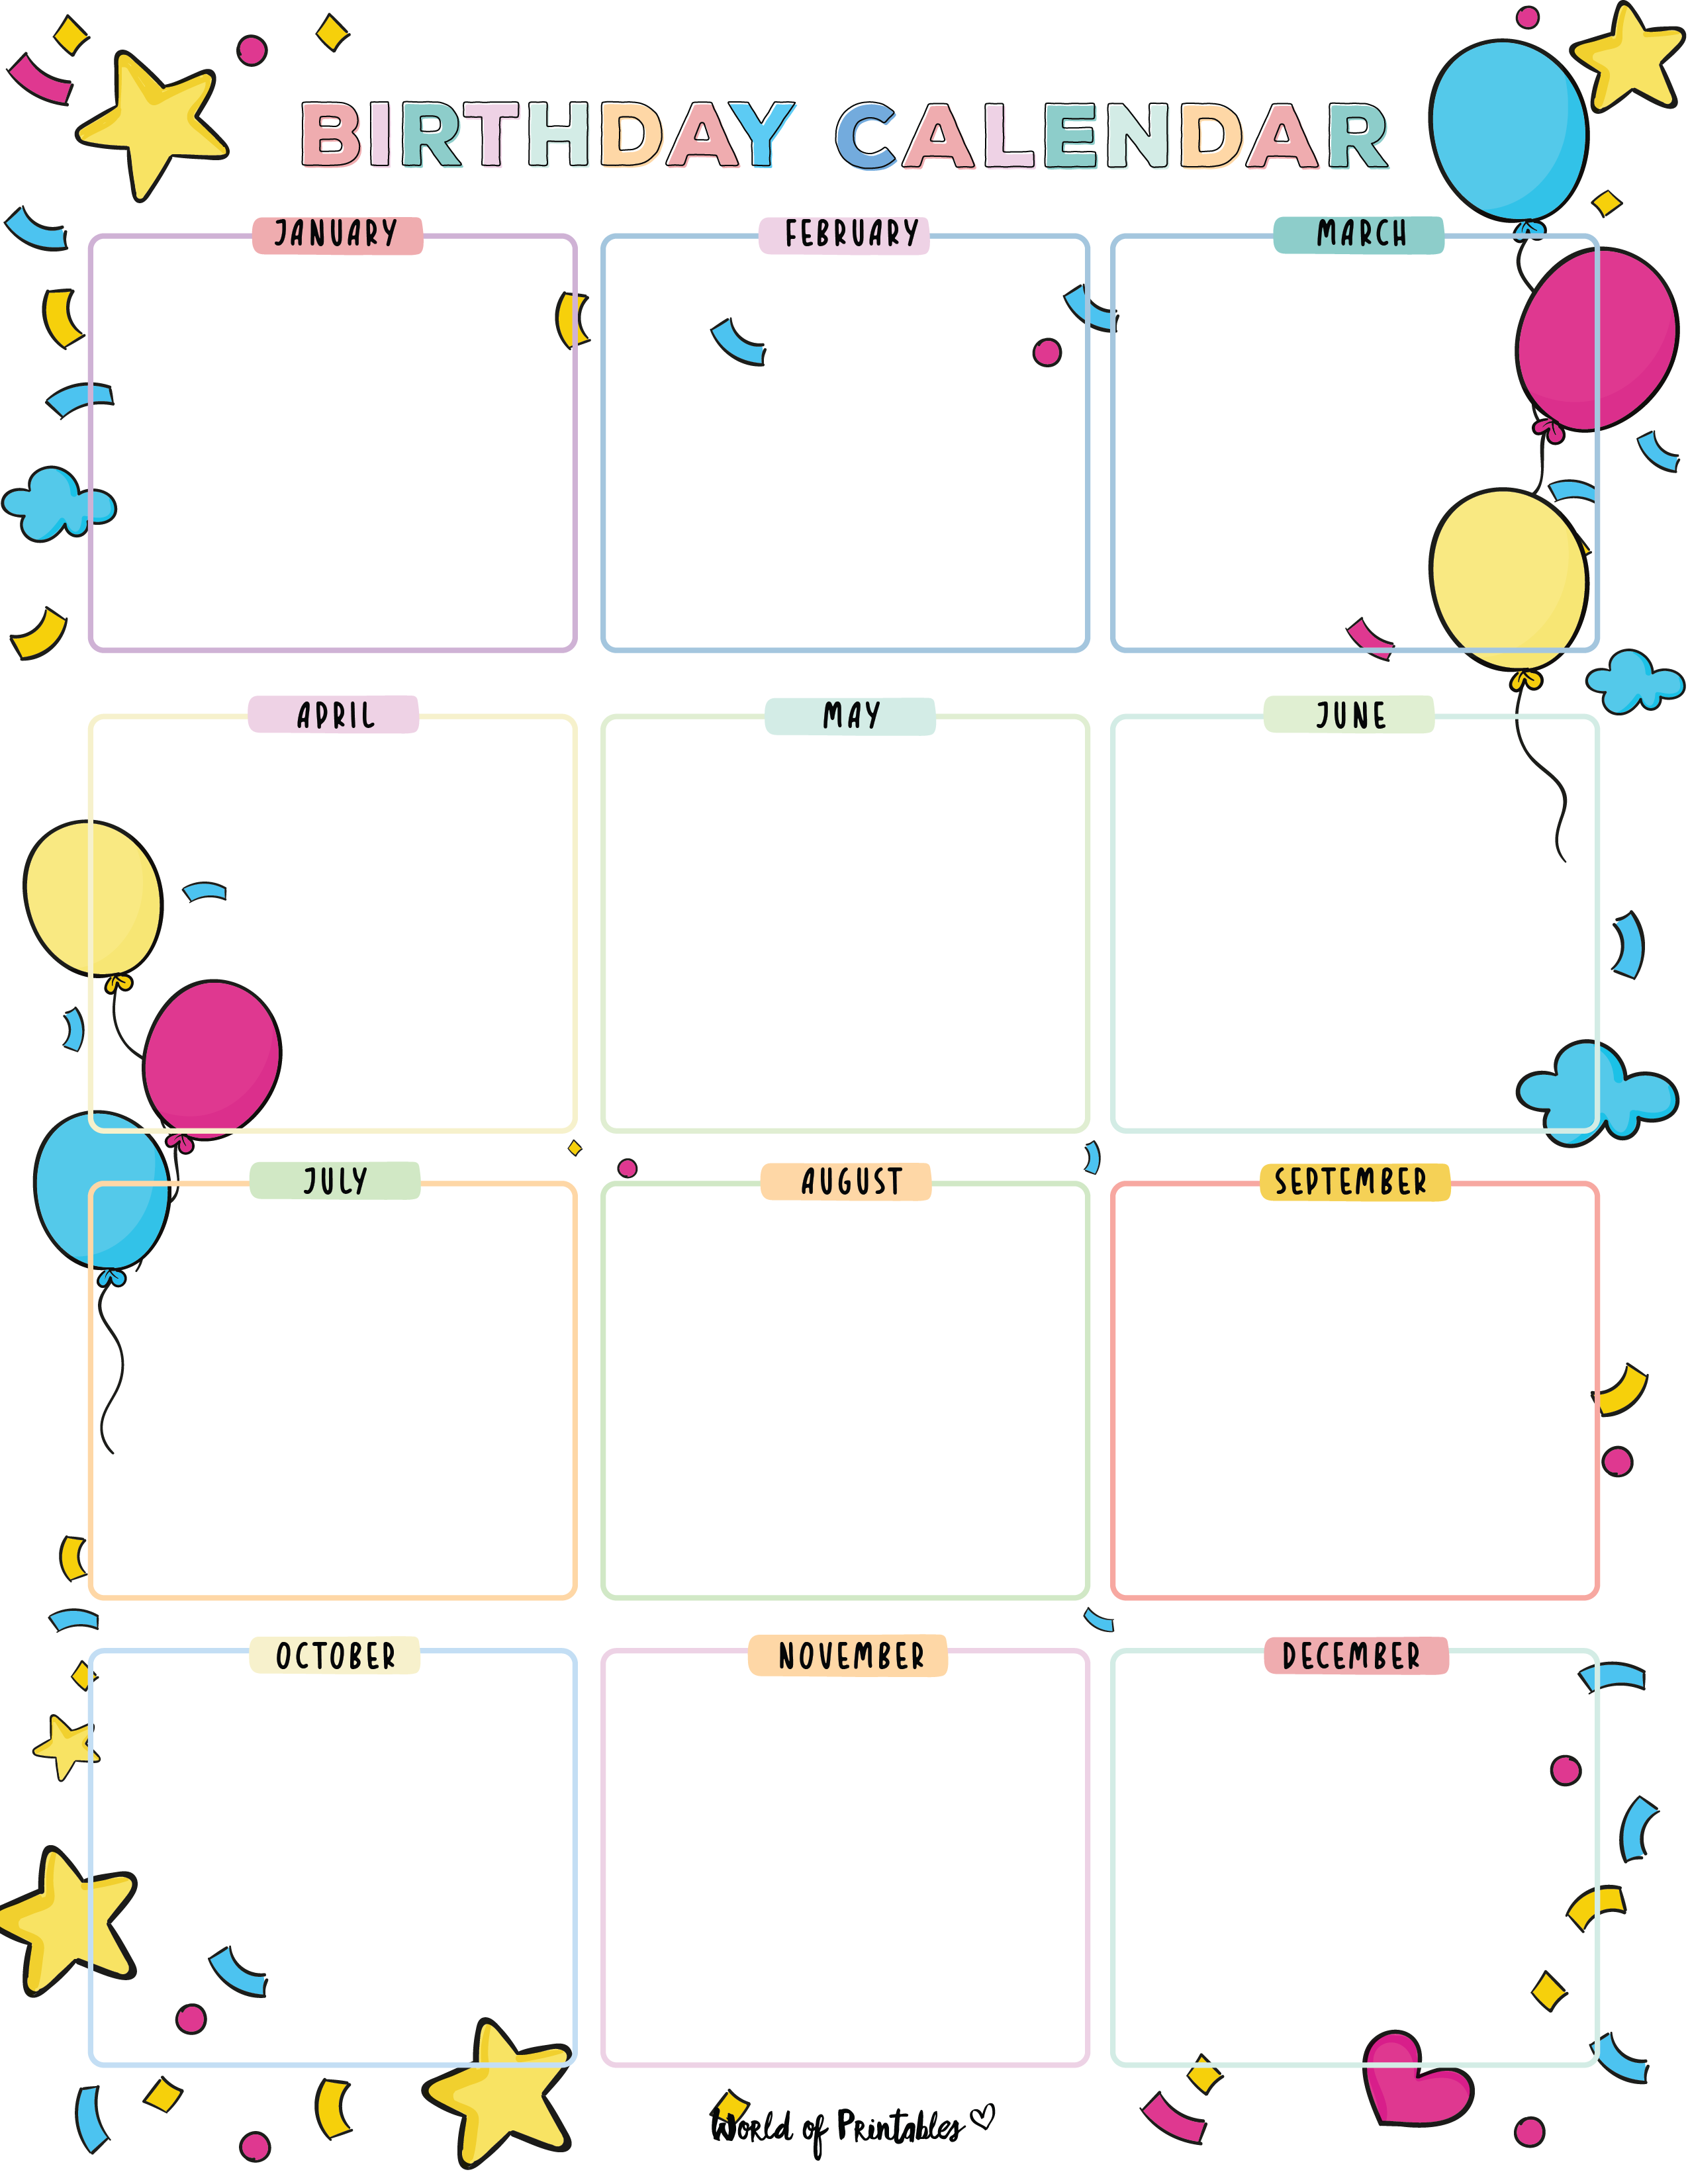 12 month birthday calendar free printable 18